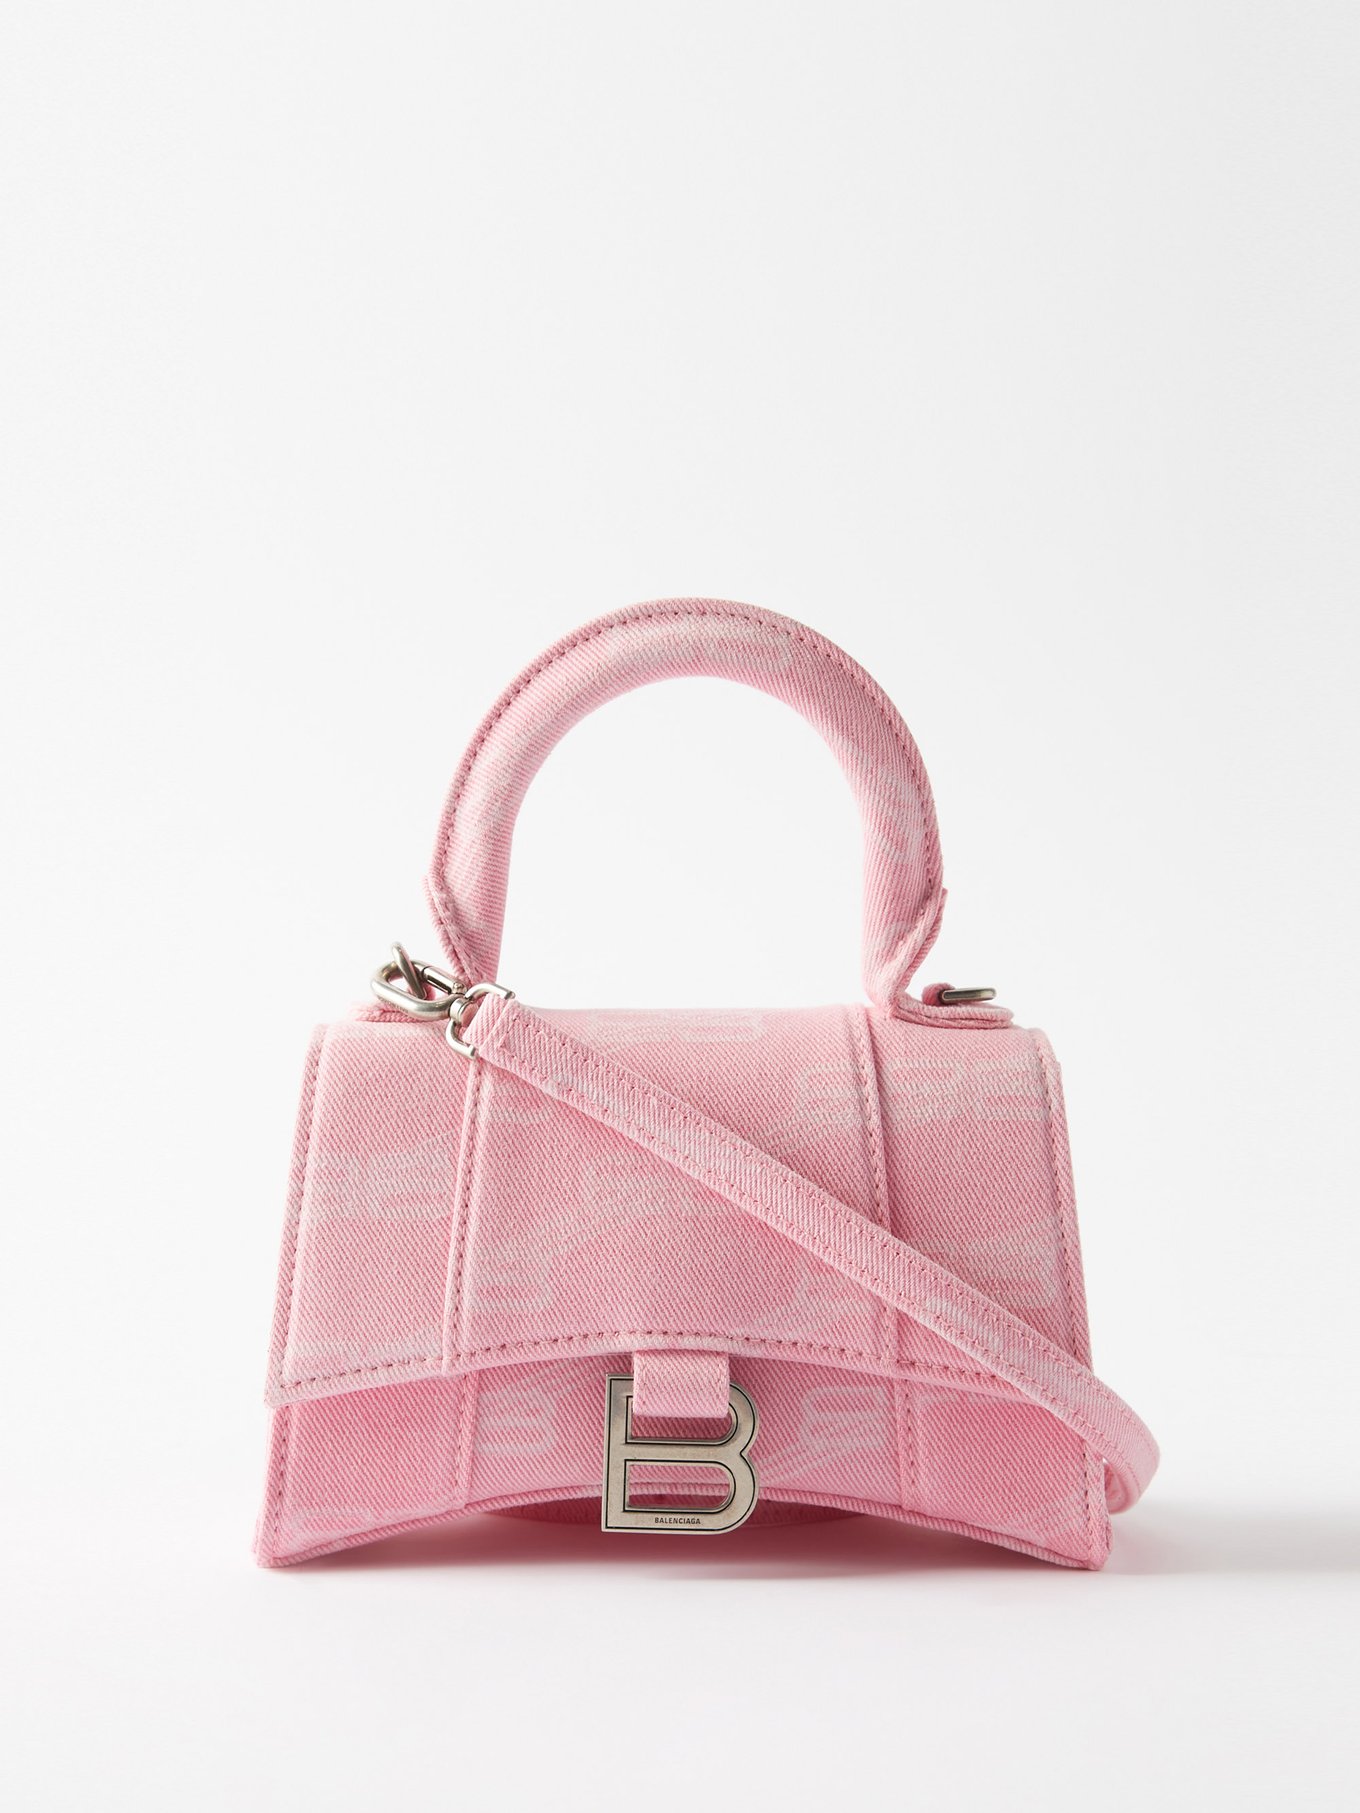 Balenciaga x adidas XS Hourglass mini bag - ShopStyle